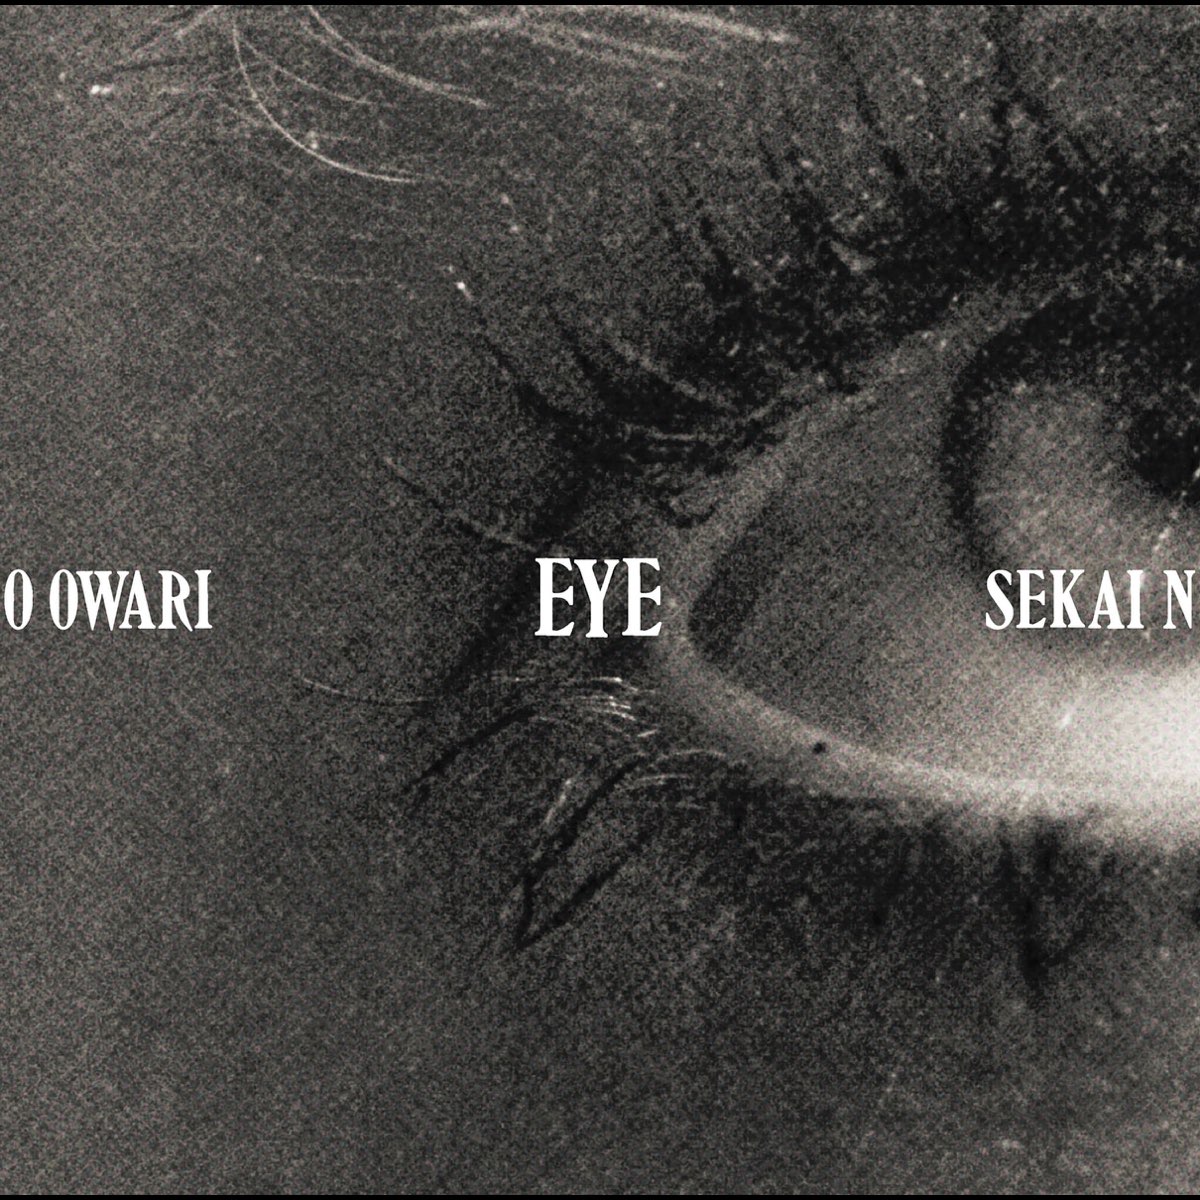 Eye - Album by SEKAI NO OWARI - Apple Music